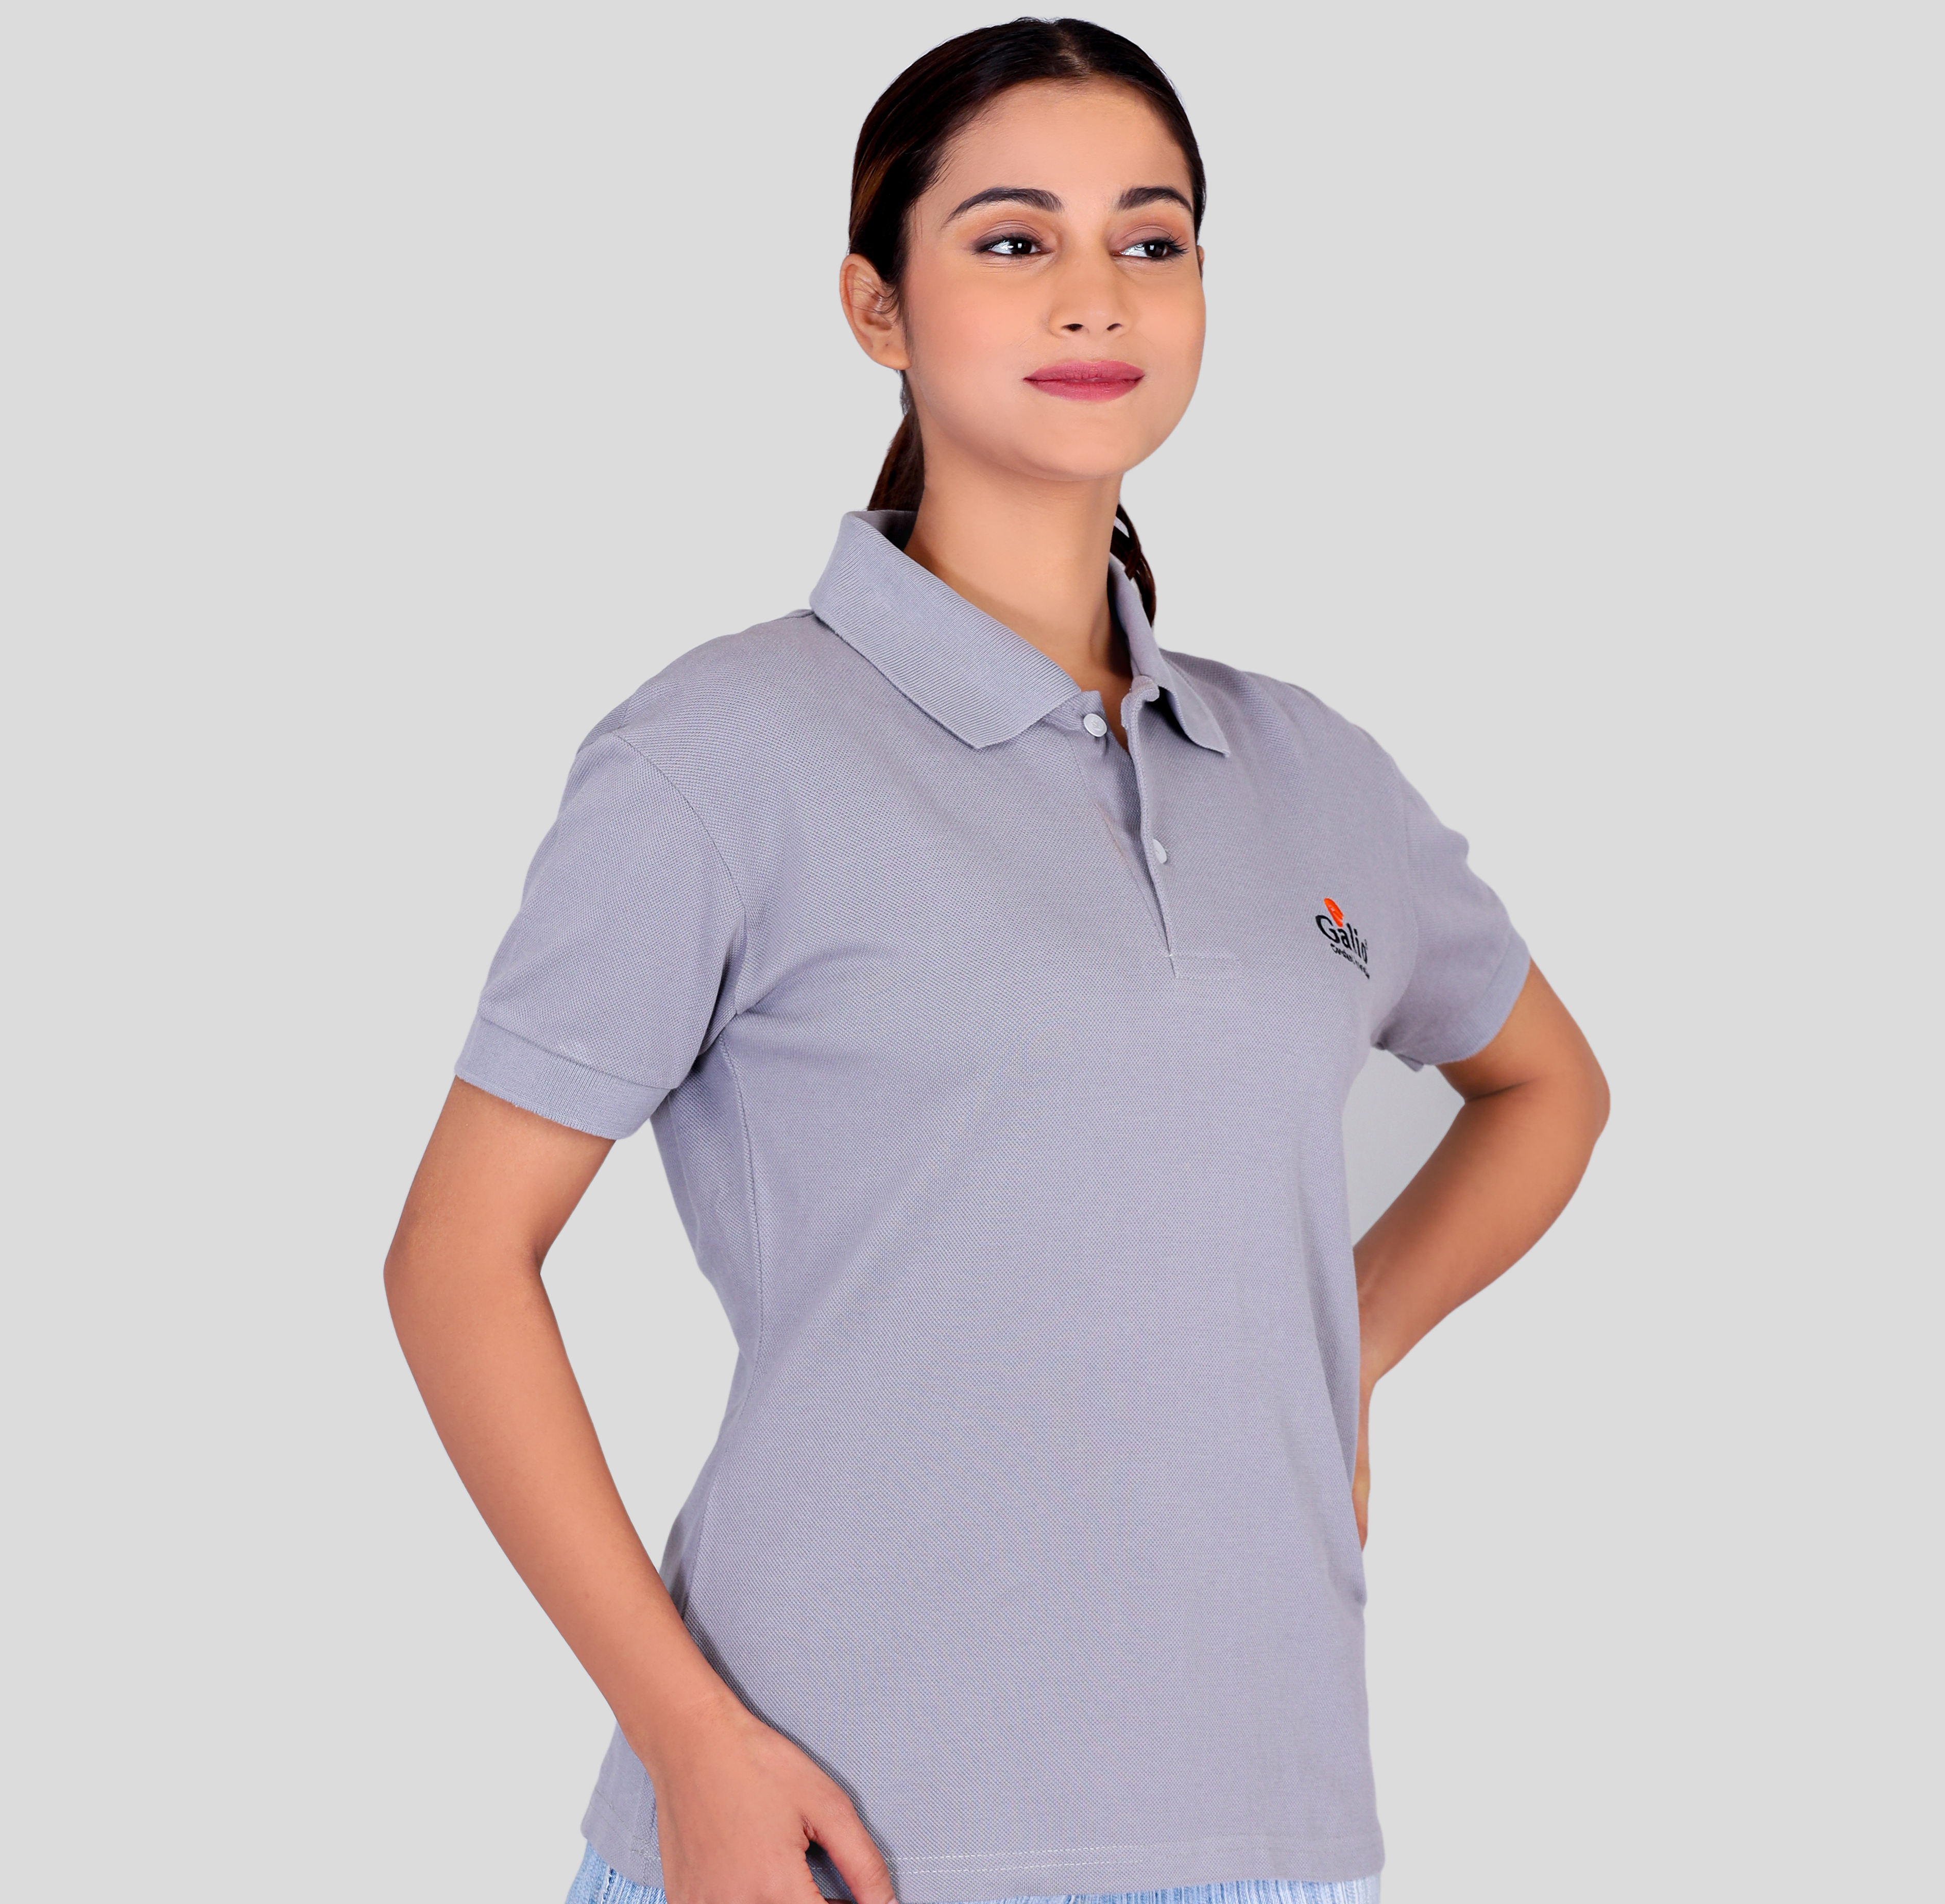 Hari Darshan white custom polo t-shirts with company logo